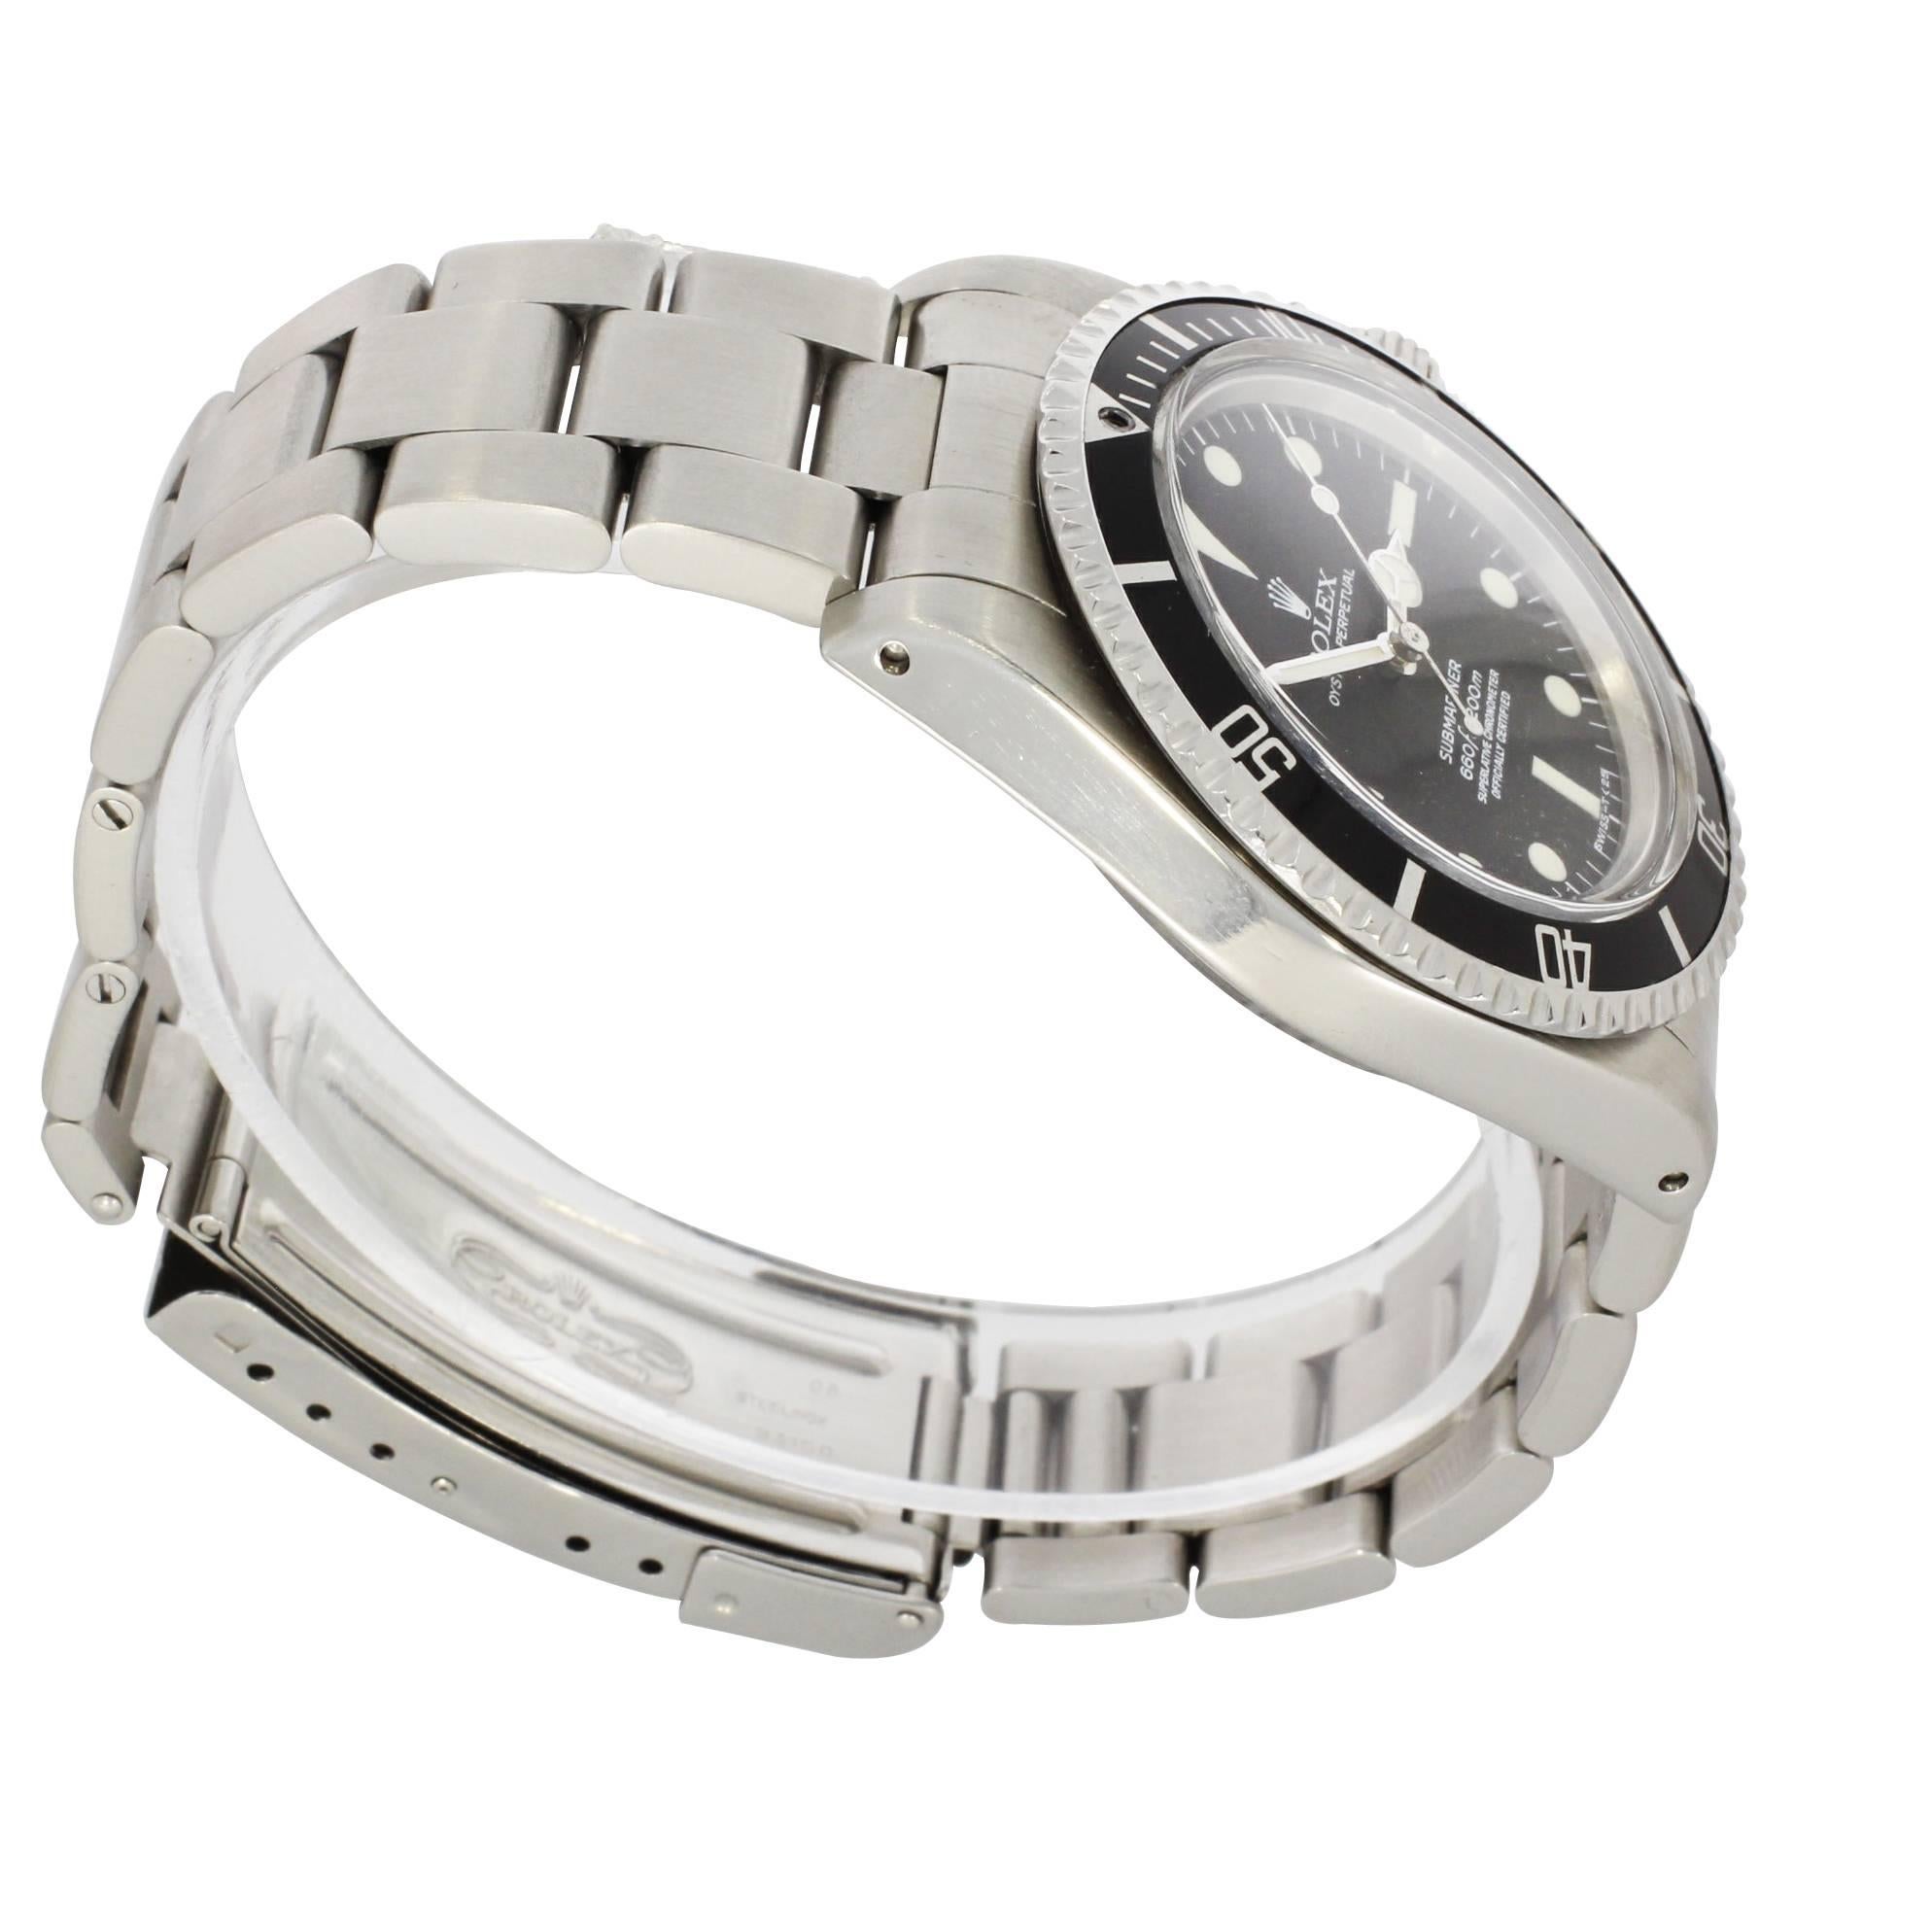 Rolex Stainless Steel Submariner Original Dial Wristwatch Ref 5512 For Sale 2